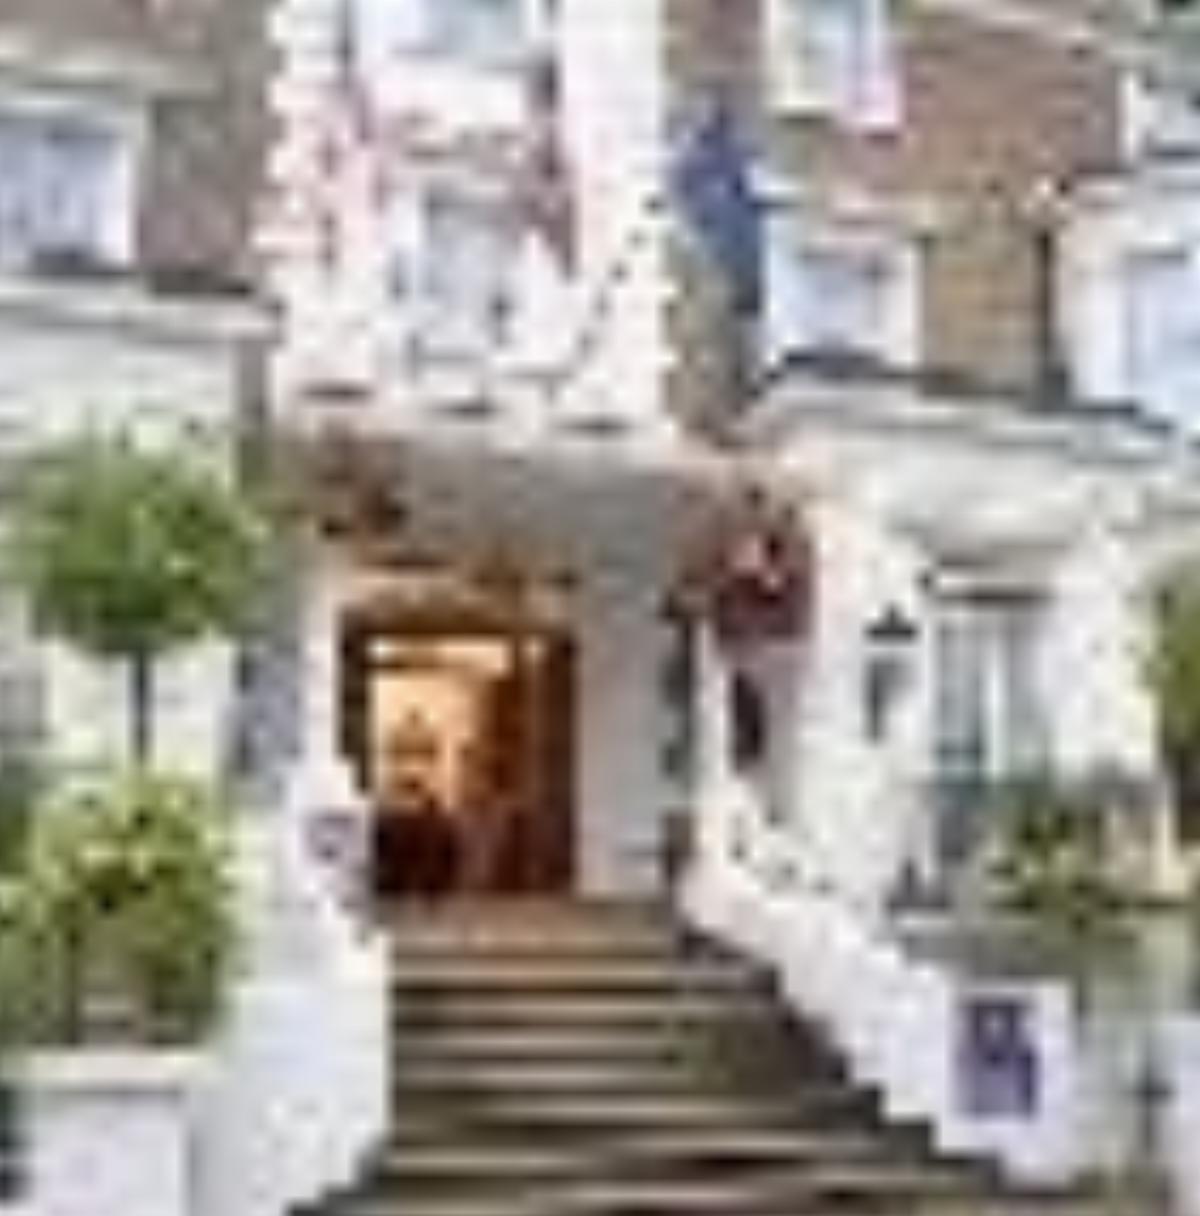 Best Western Swiss Cottage Hotel Hotel London United Kingdom